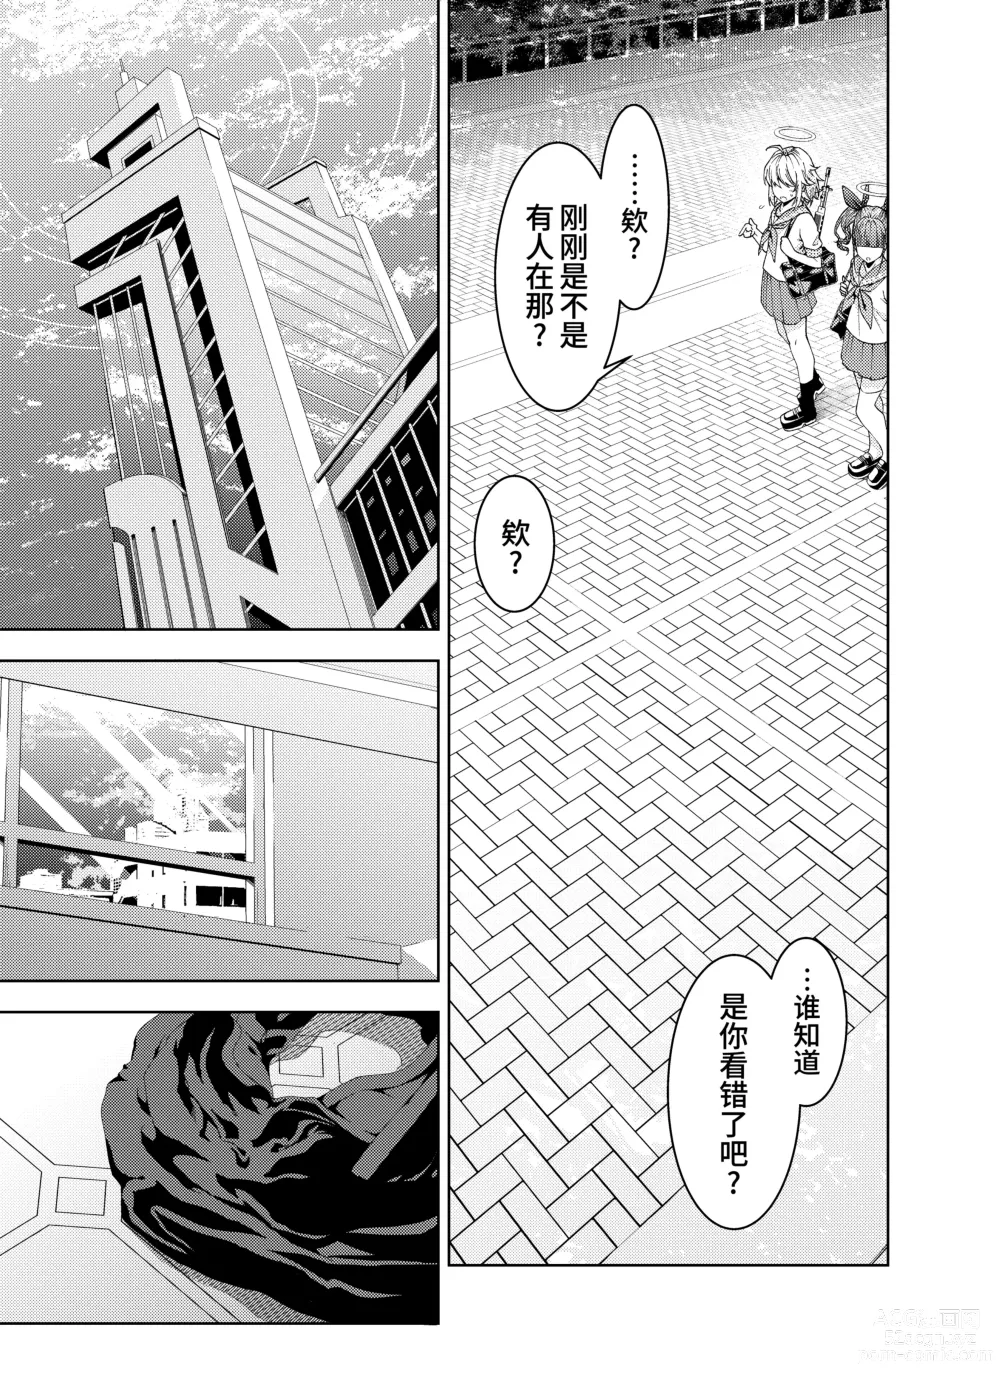 Page 6 of doujinshi 时、时不时